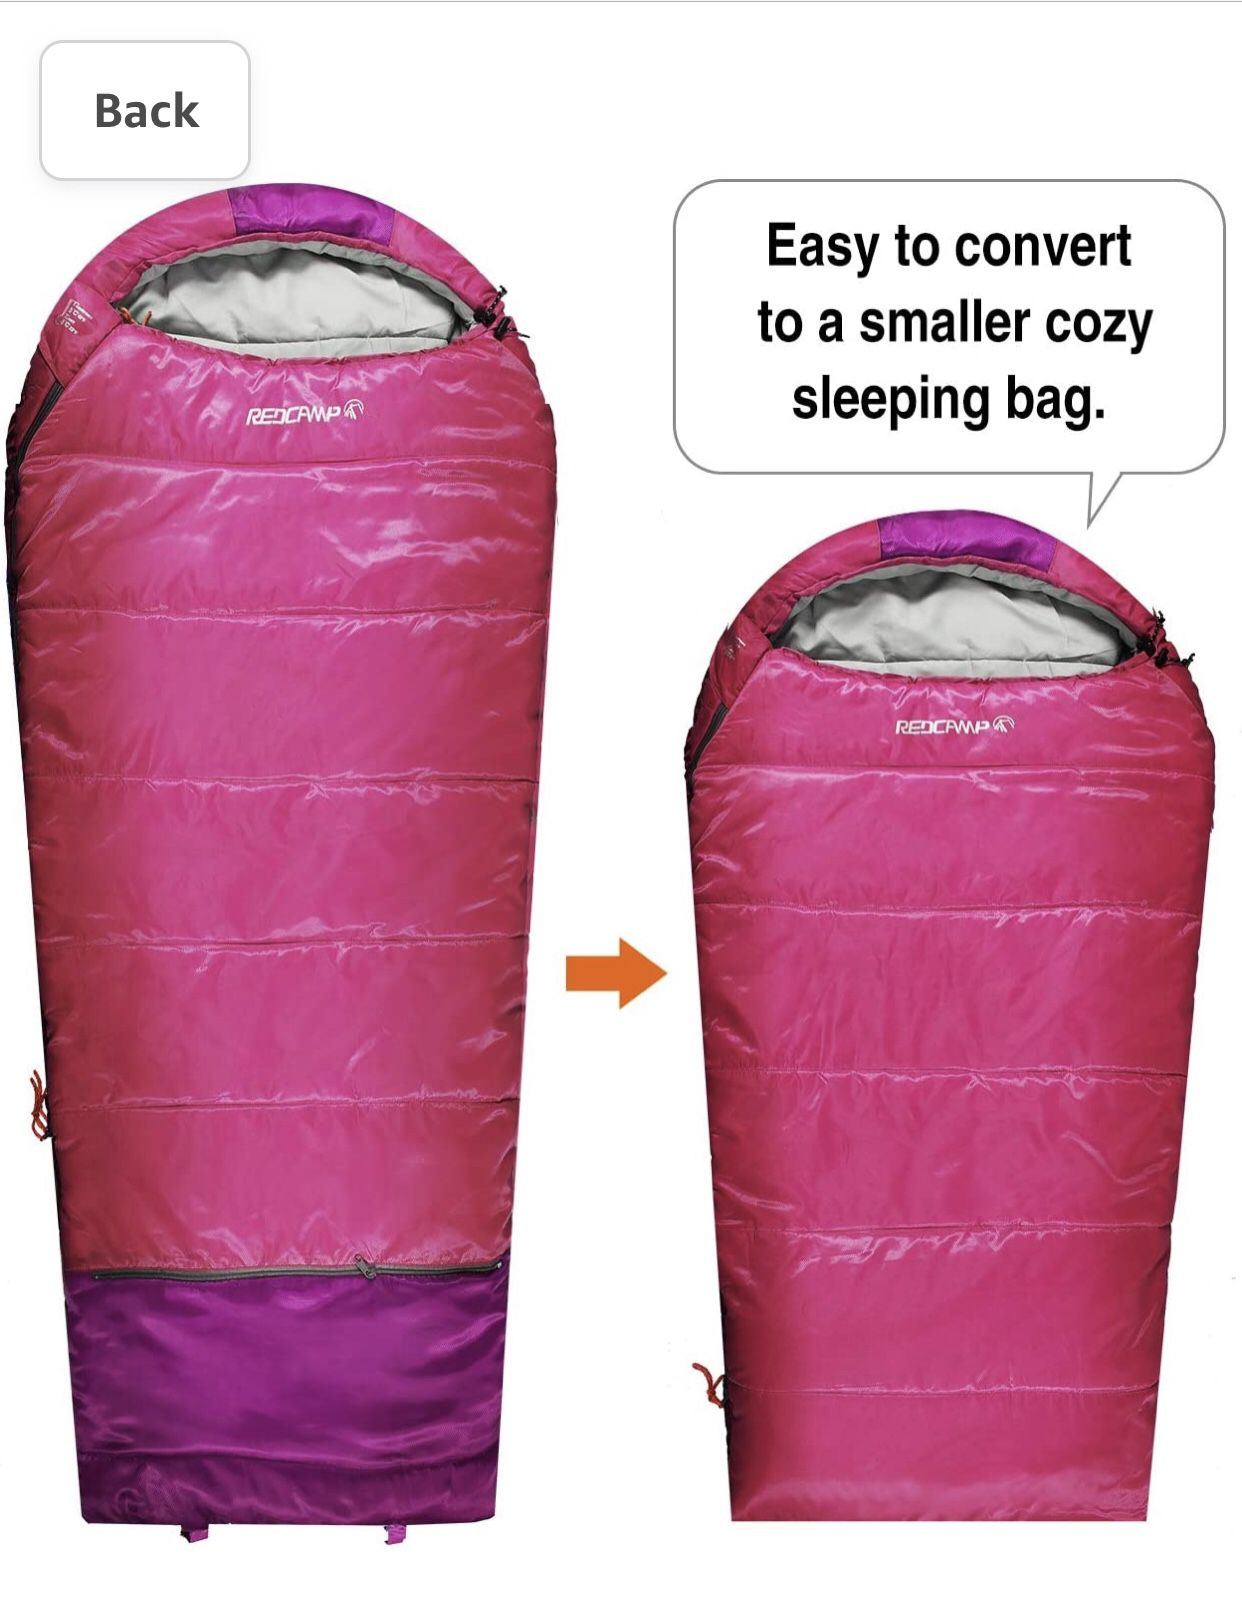 REDCAMP Kids Mummy Sleeping Bag for Camping, 32-40 Degree 3 Season Cold Weather Sleeping Bag Fit Boys,Girls & Teens, Blue/Rose Red